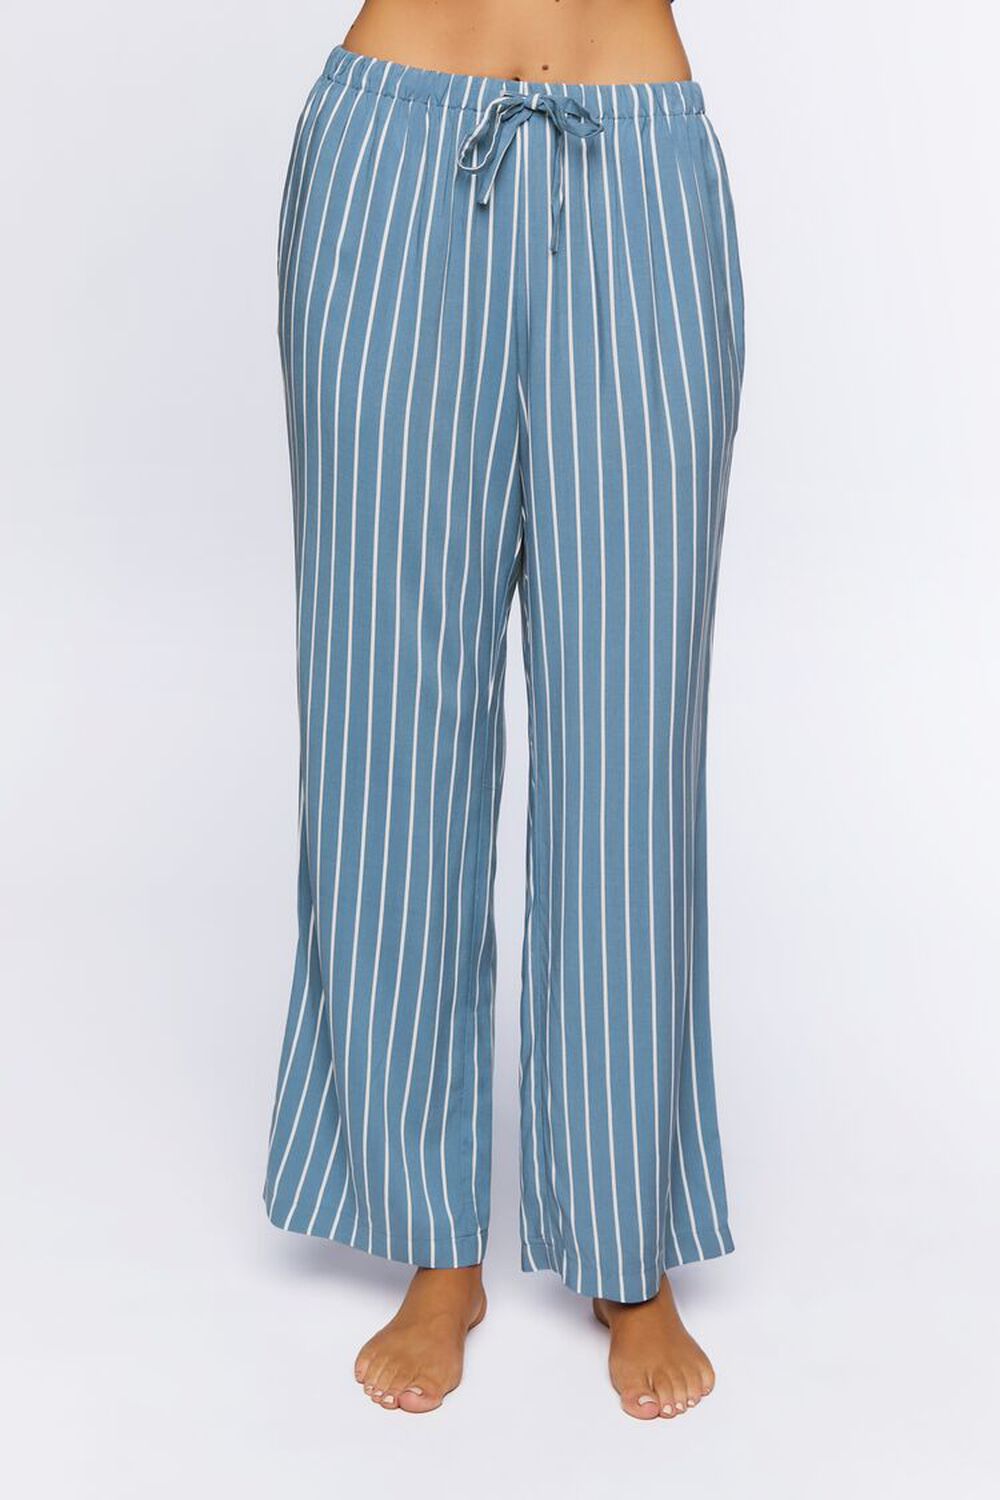 COLONY BLUE/WHITE Striped Pajama Pants, image 2